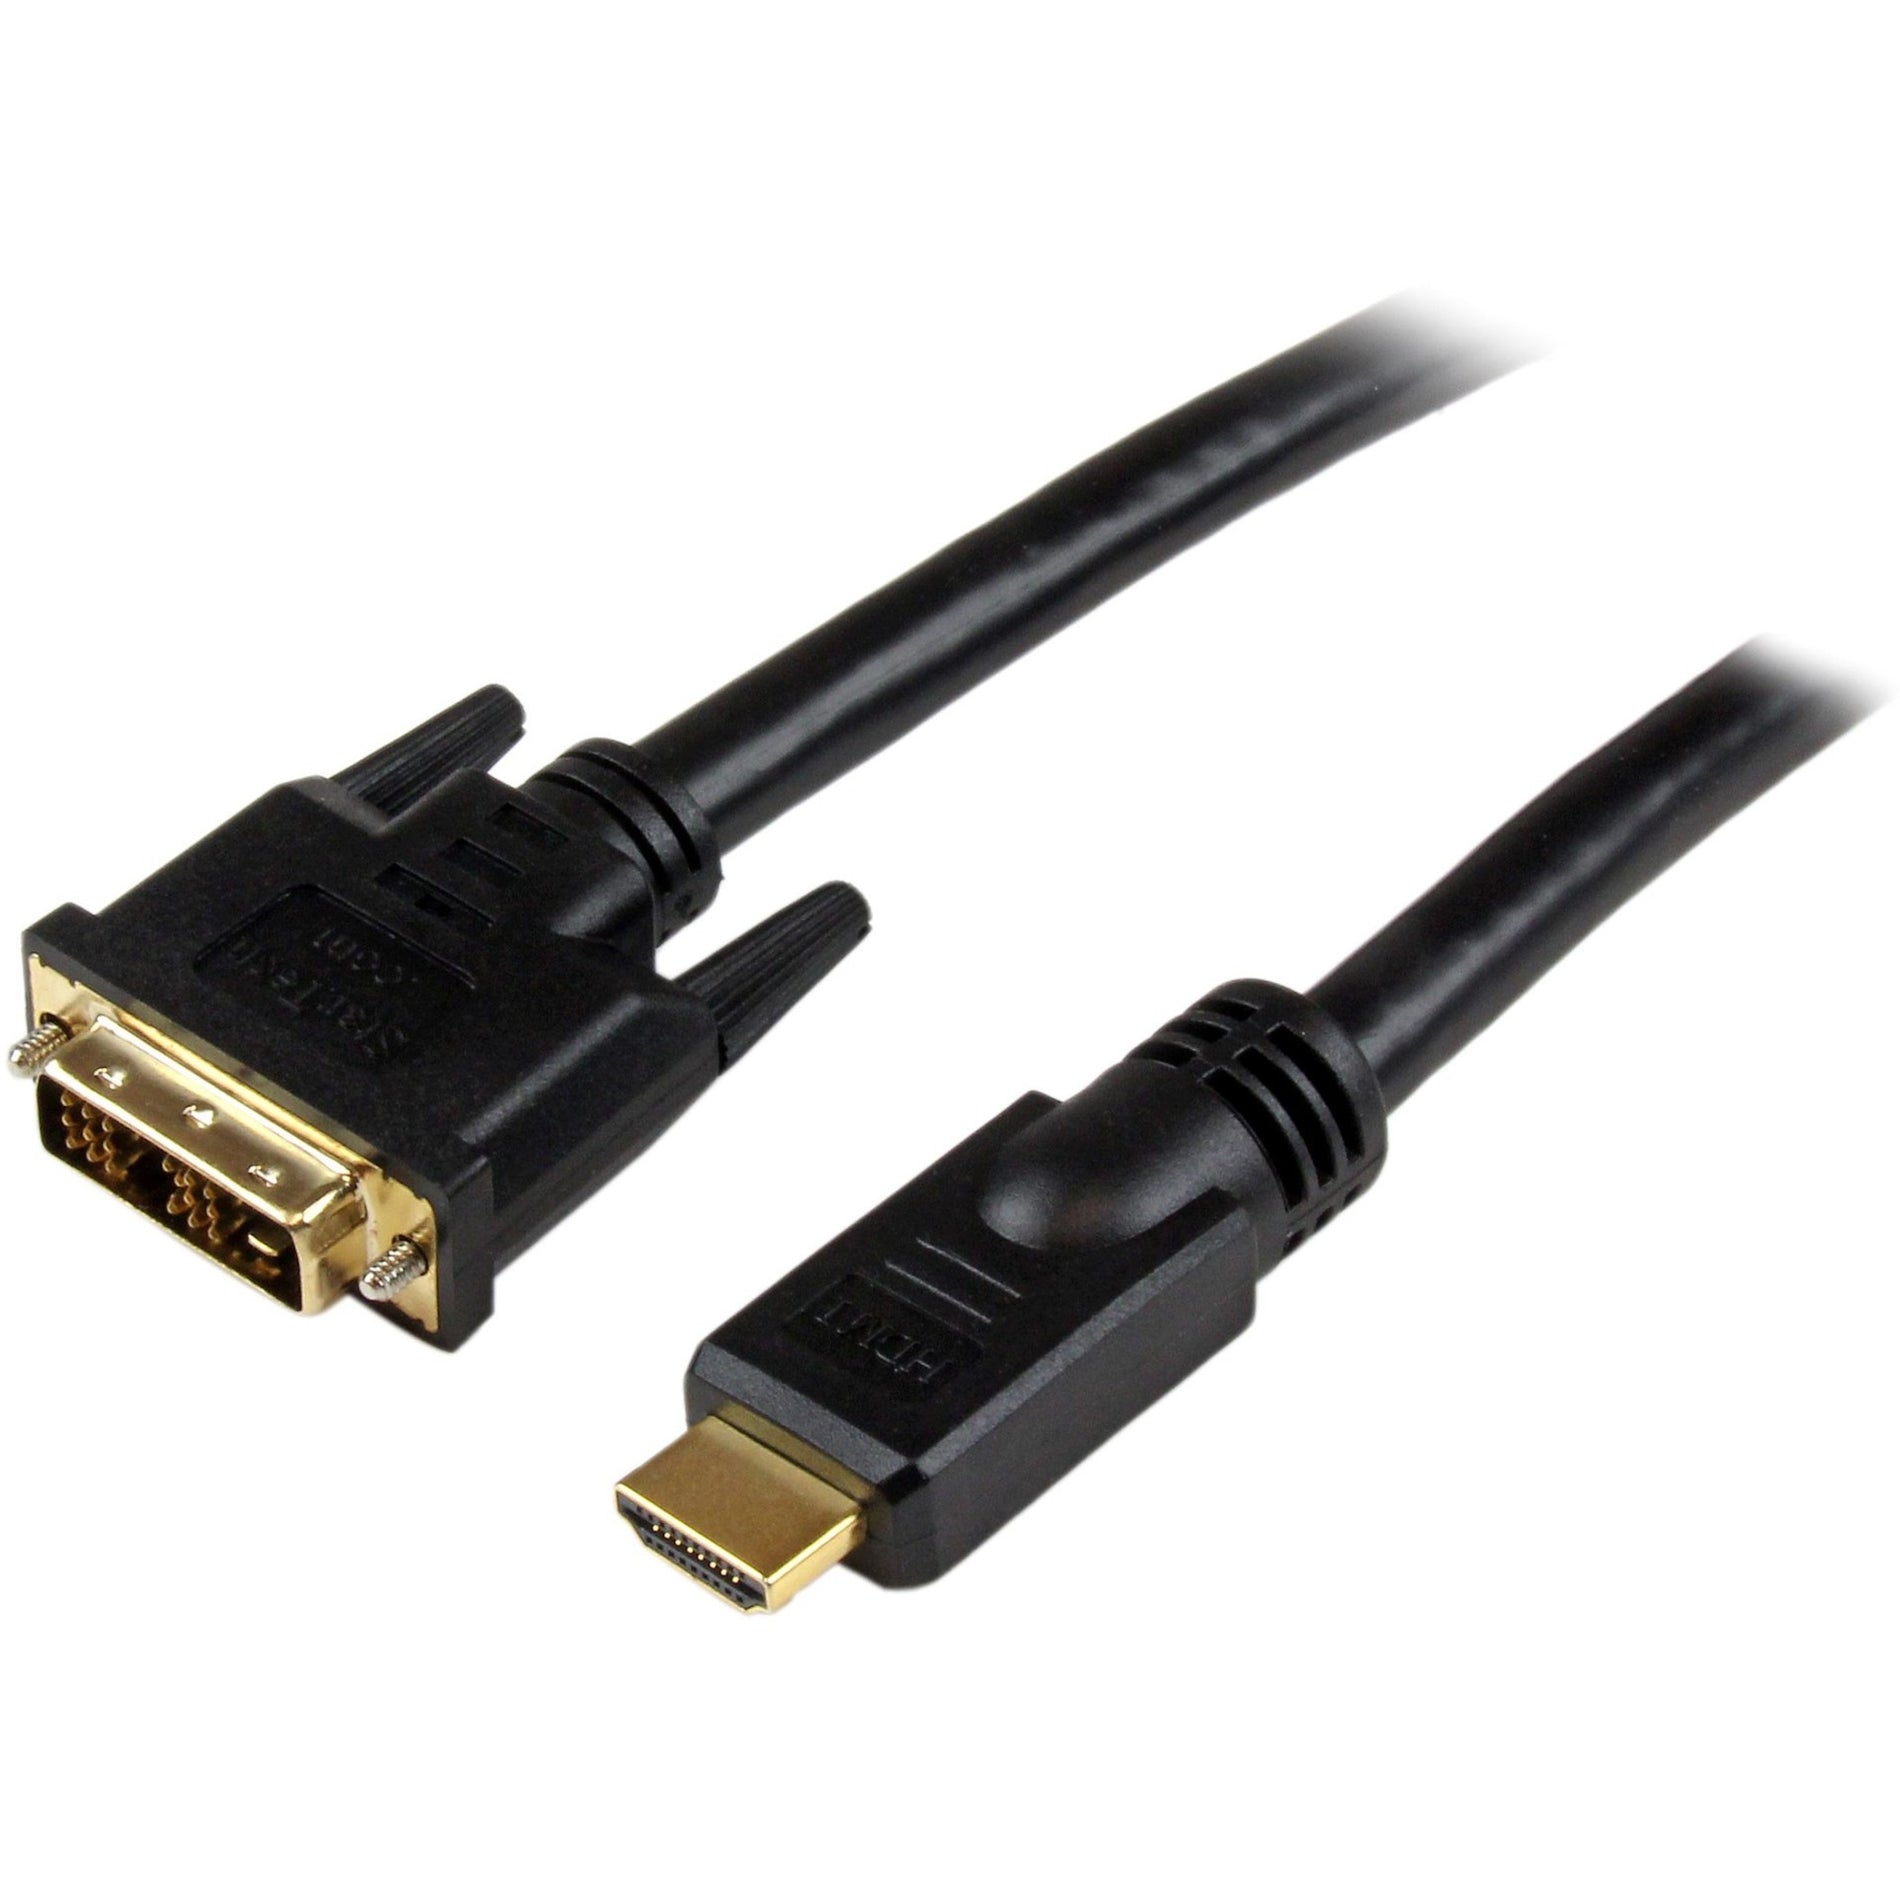 StarTech.com HDMIDVIMM30 30 ft HDMI to DVI-D Kabel - M/M Geformt Passiv Zugentlastung Kupferleiter Geschirmt 24 AWG Vernickelte Stecker Schwarz